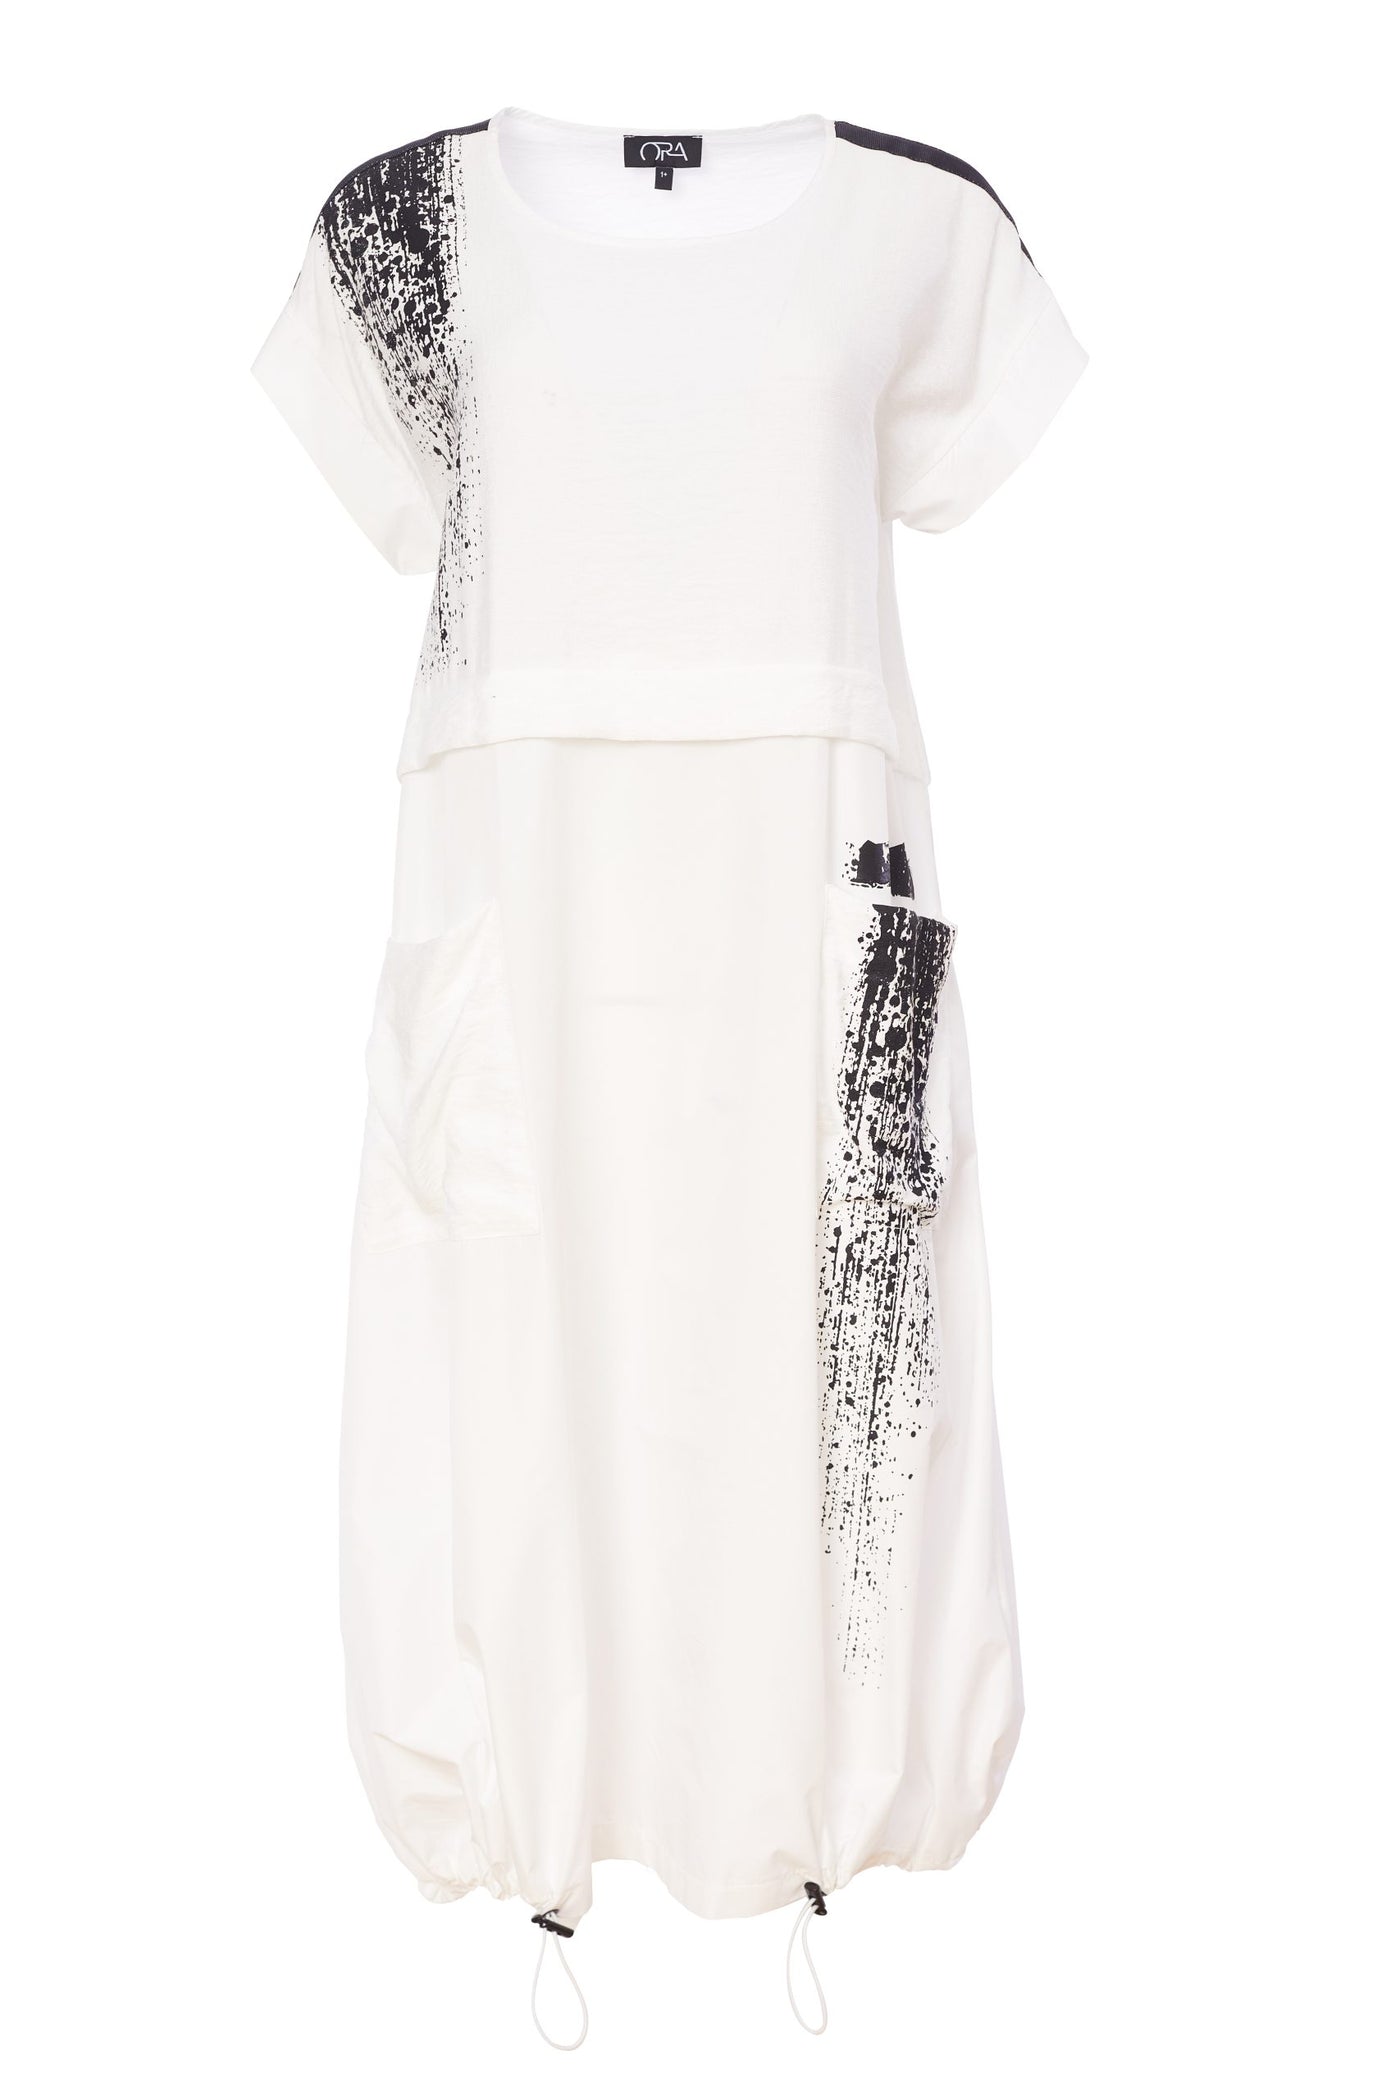 White & Black Dress With Waterproof Effect Bottom